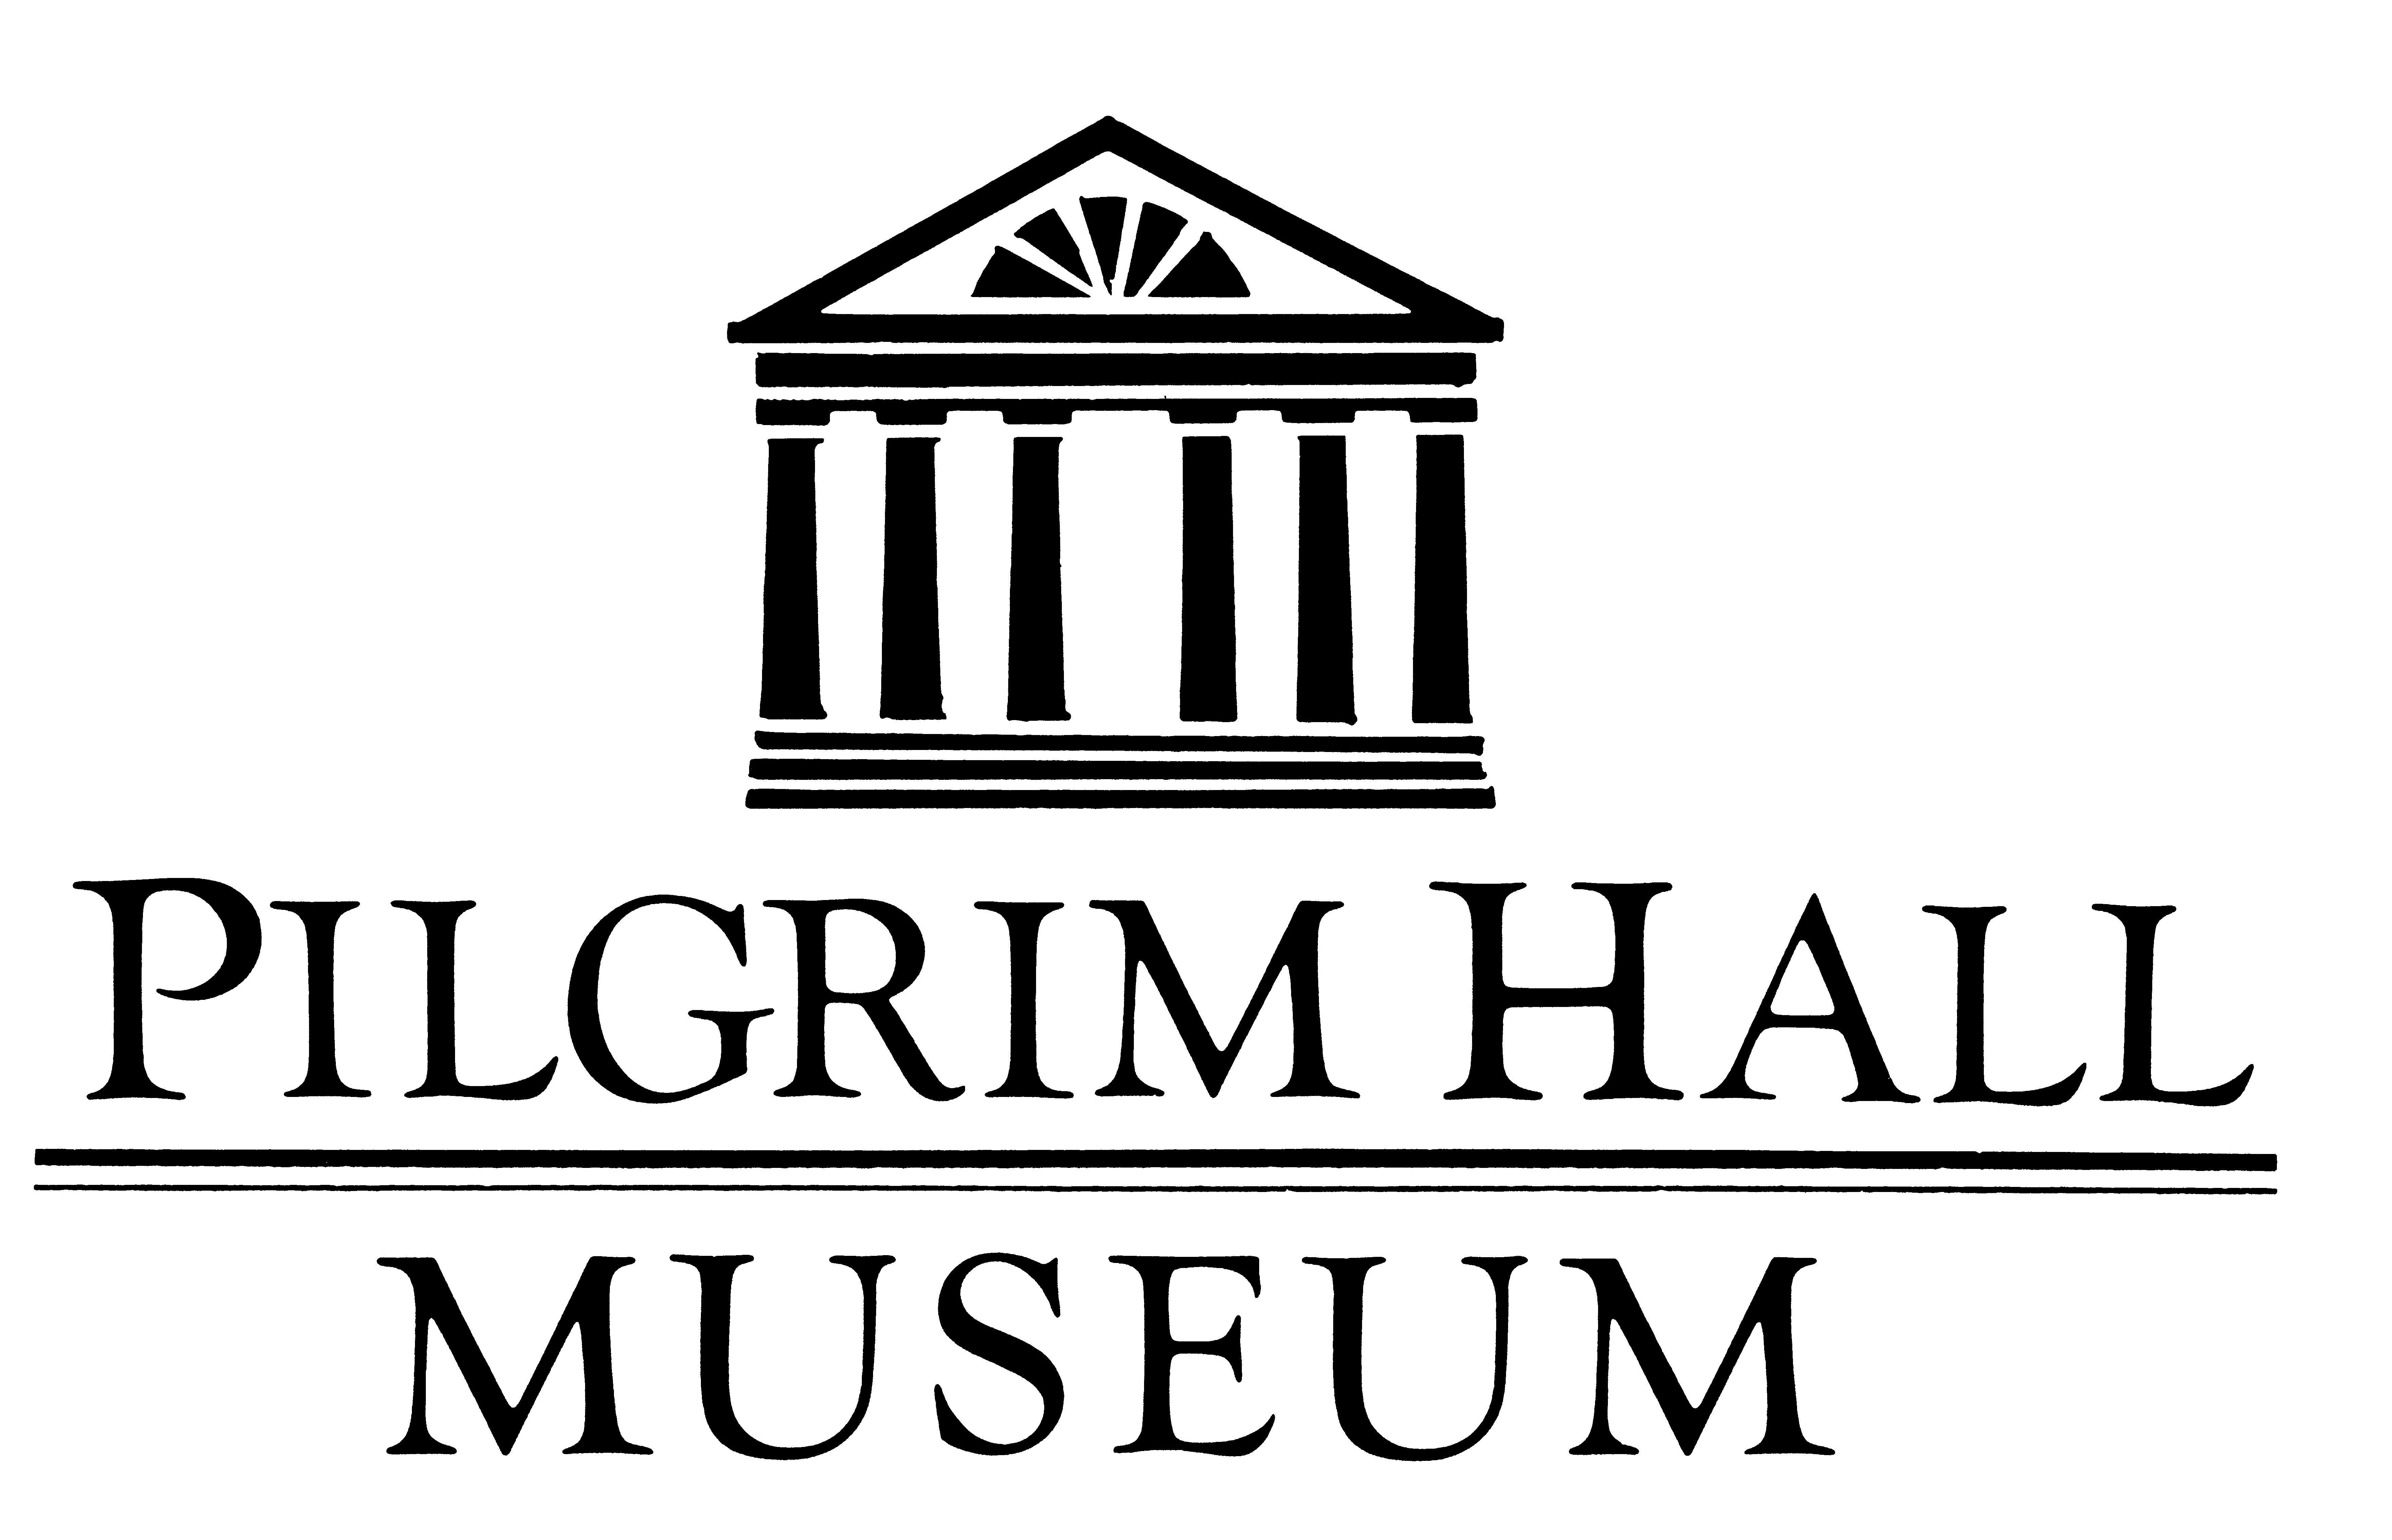 Hall Logo - About our Catablog. The Official Catablog of Pilgrim Hall Museum